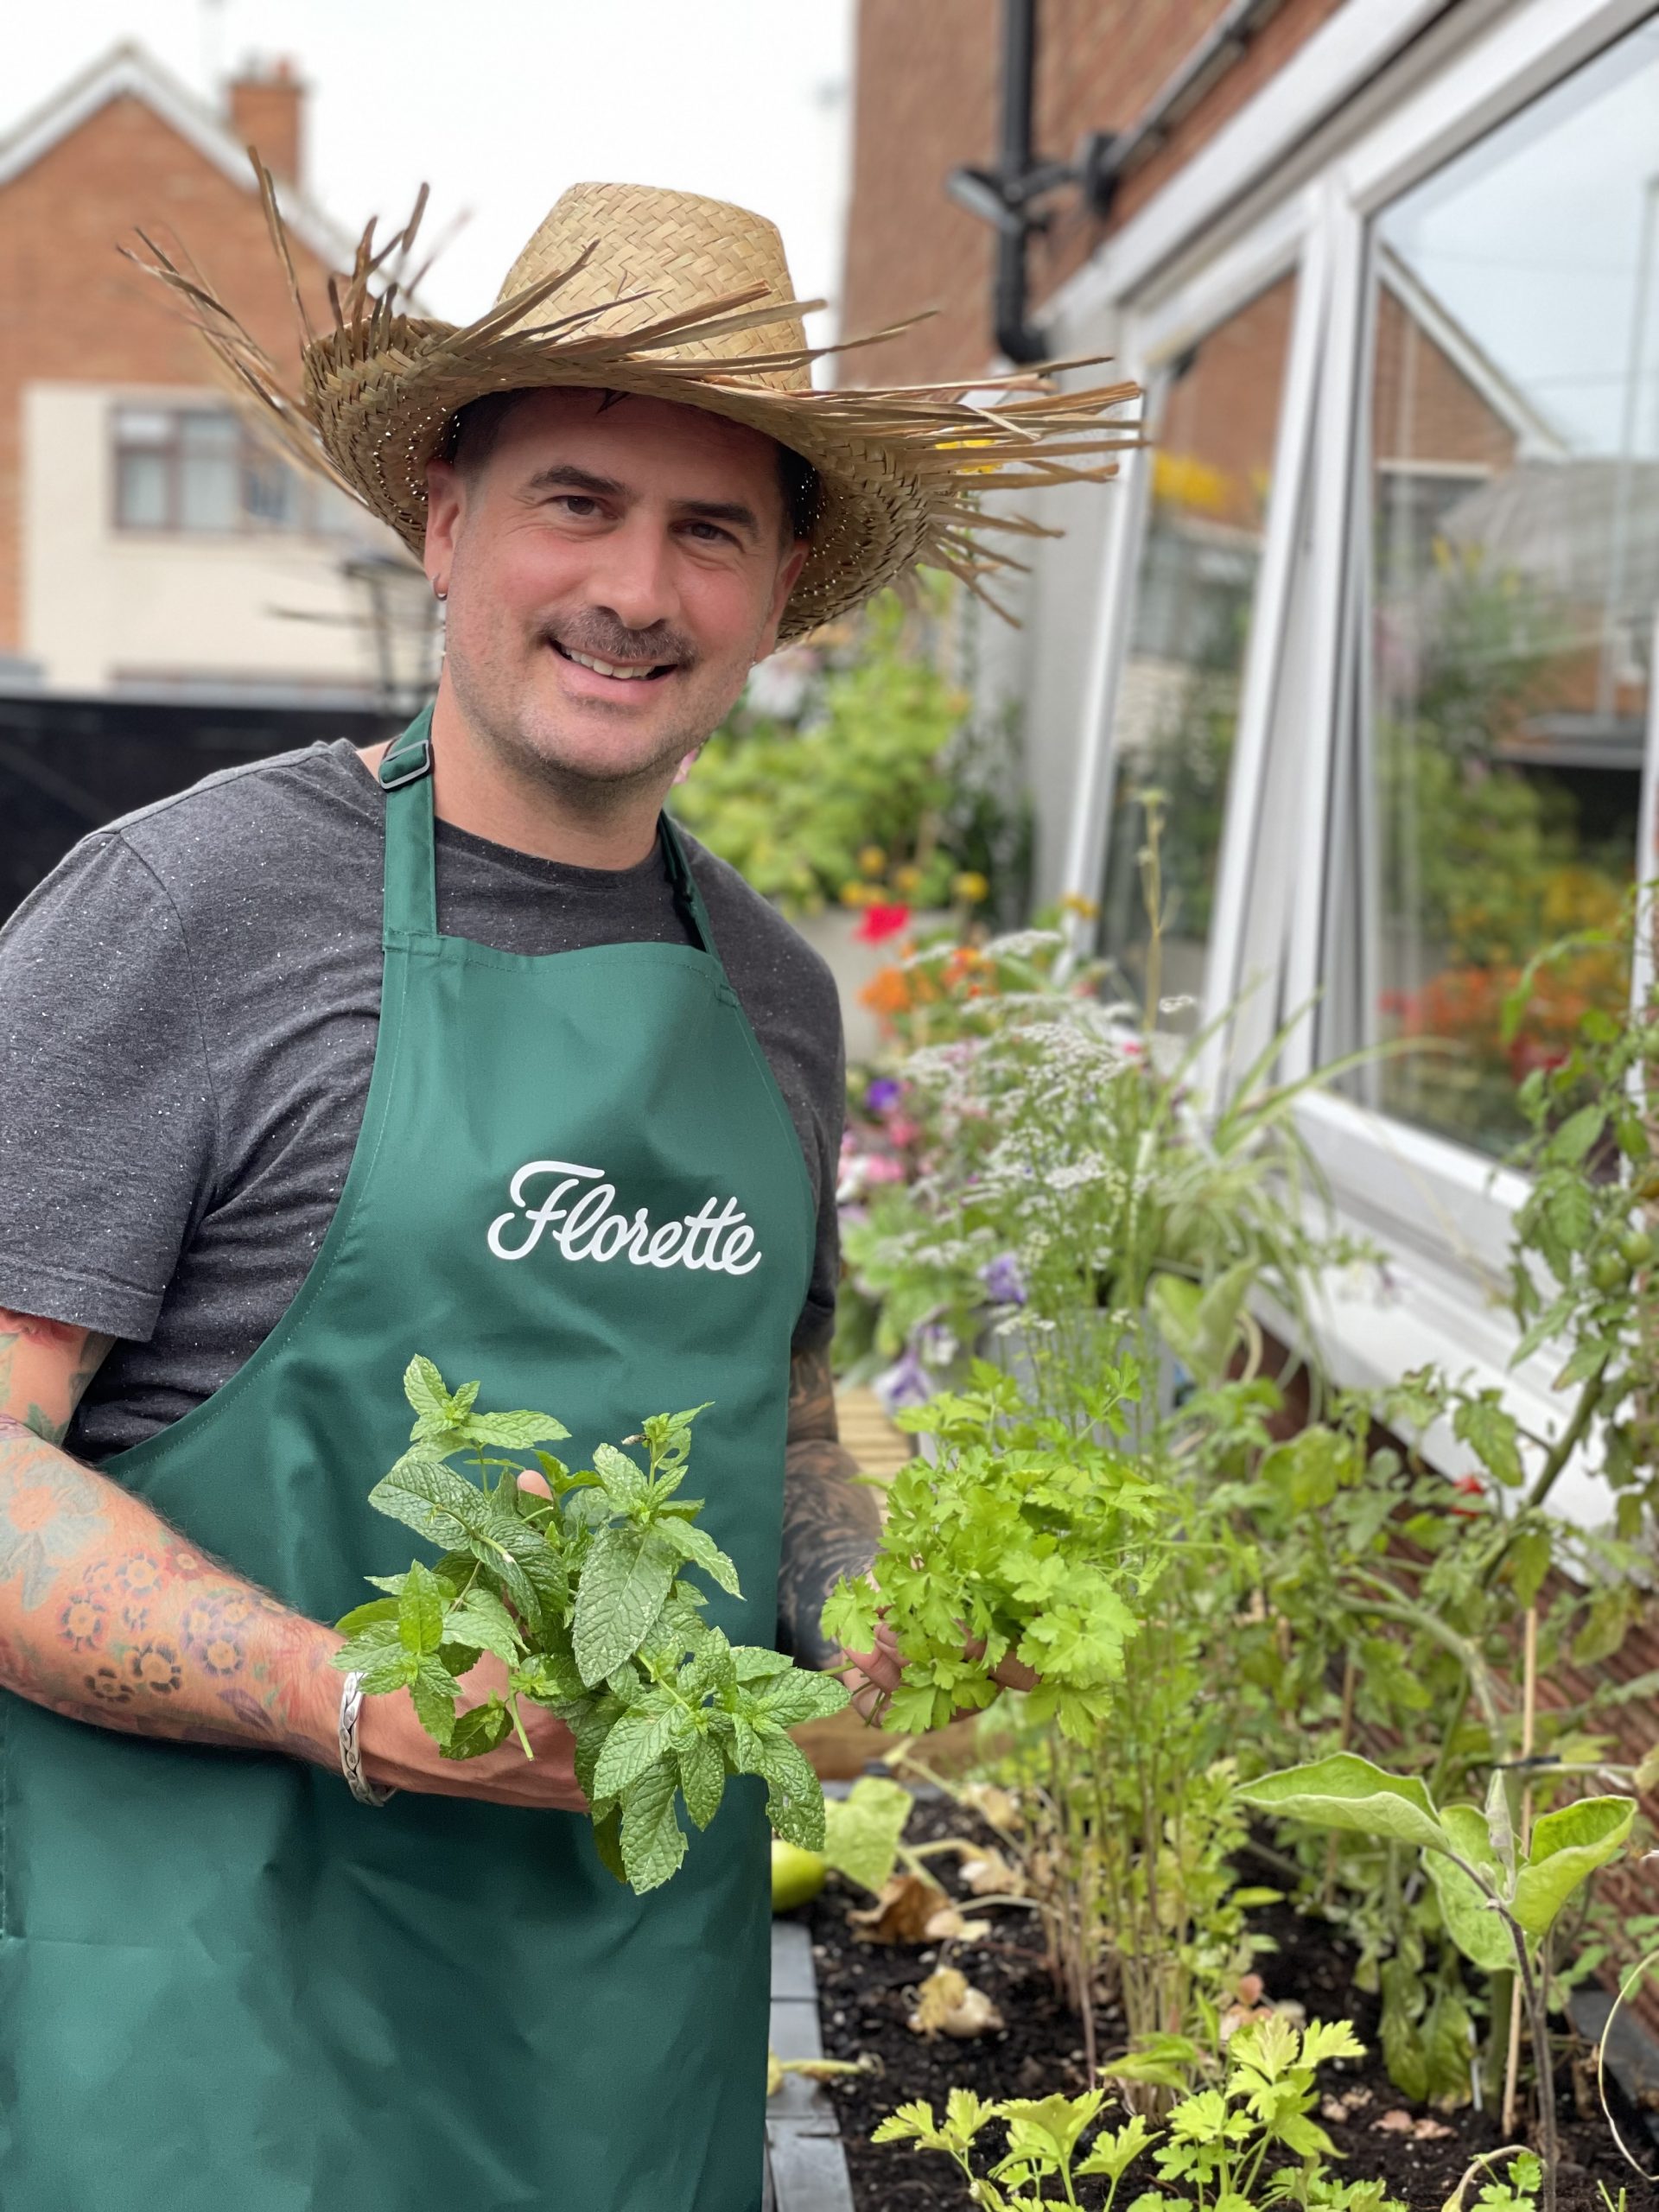 Florette recruits horticulture expert to showcase brand